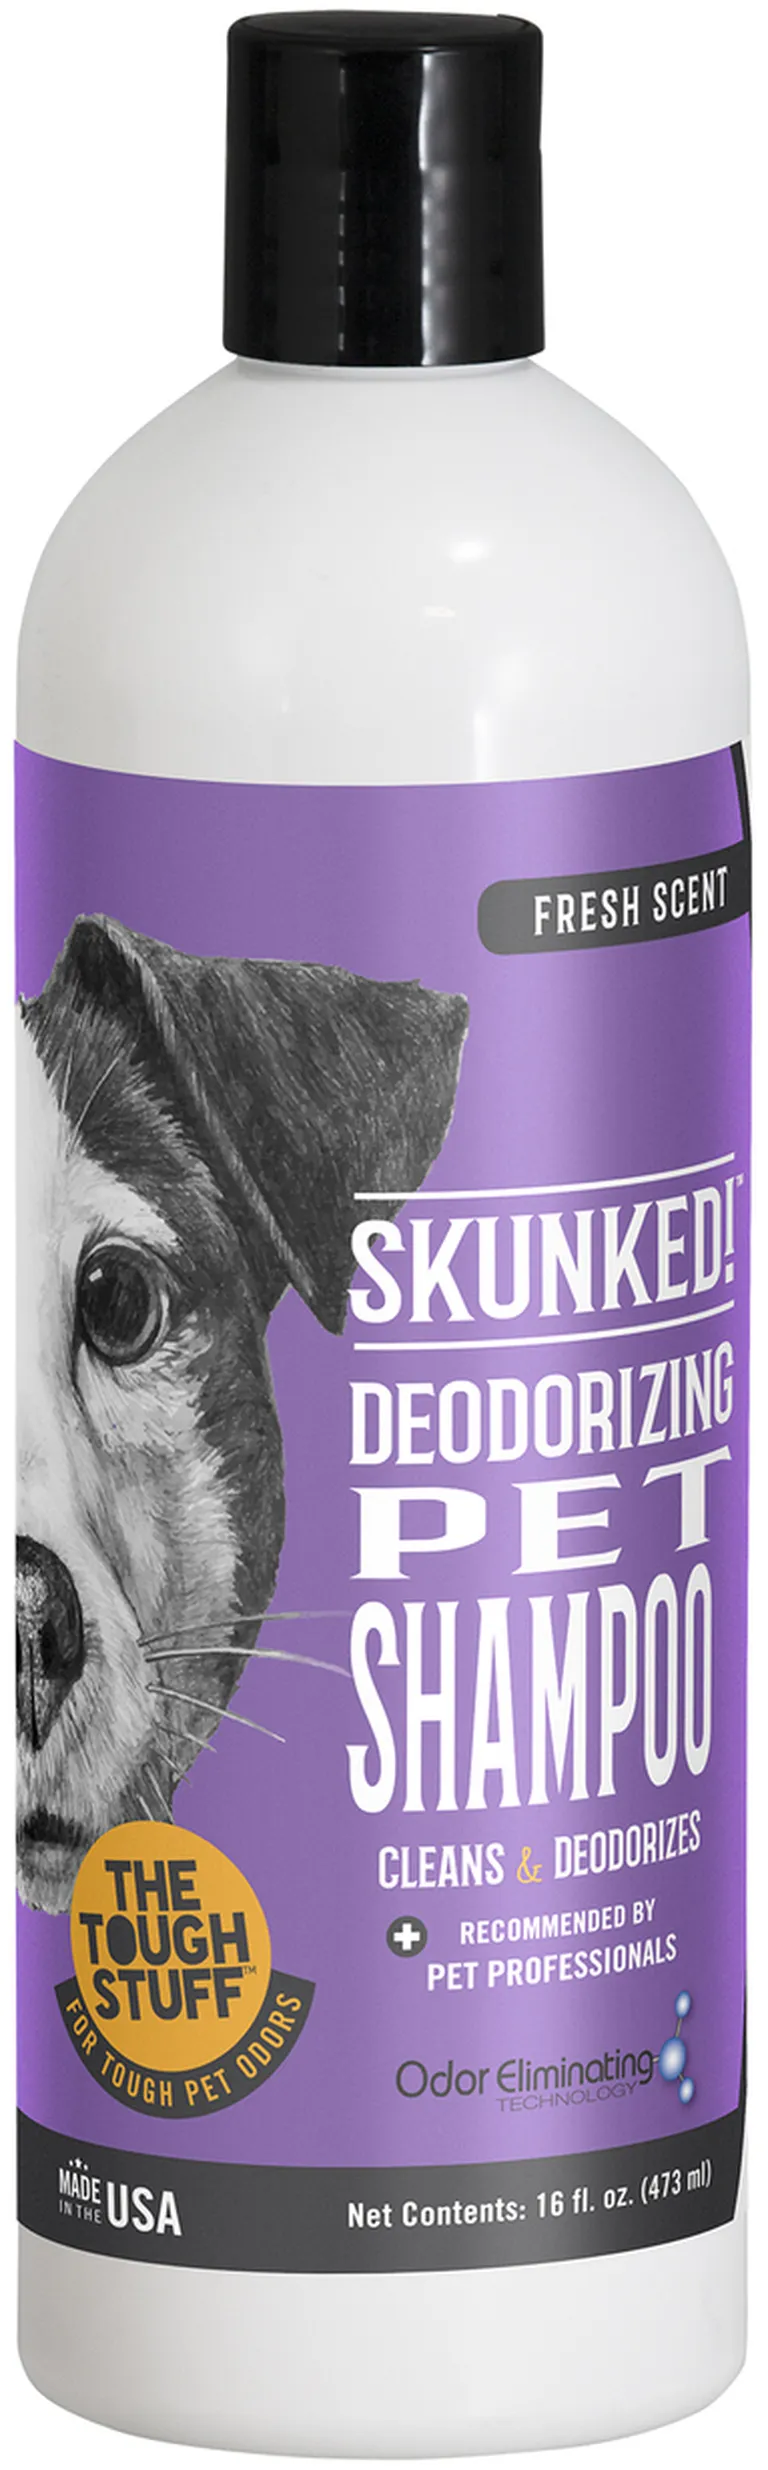 Nilodor Tough Stuff Skunked! Deodorizing Shampoo for Dogs Photo 1